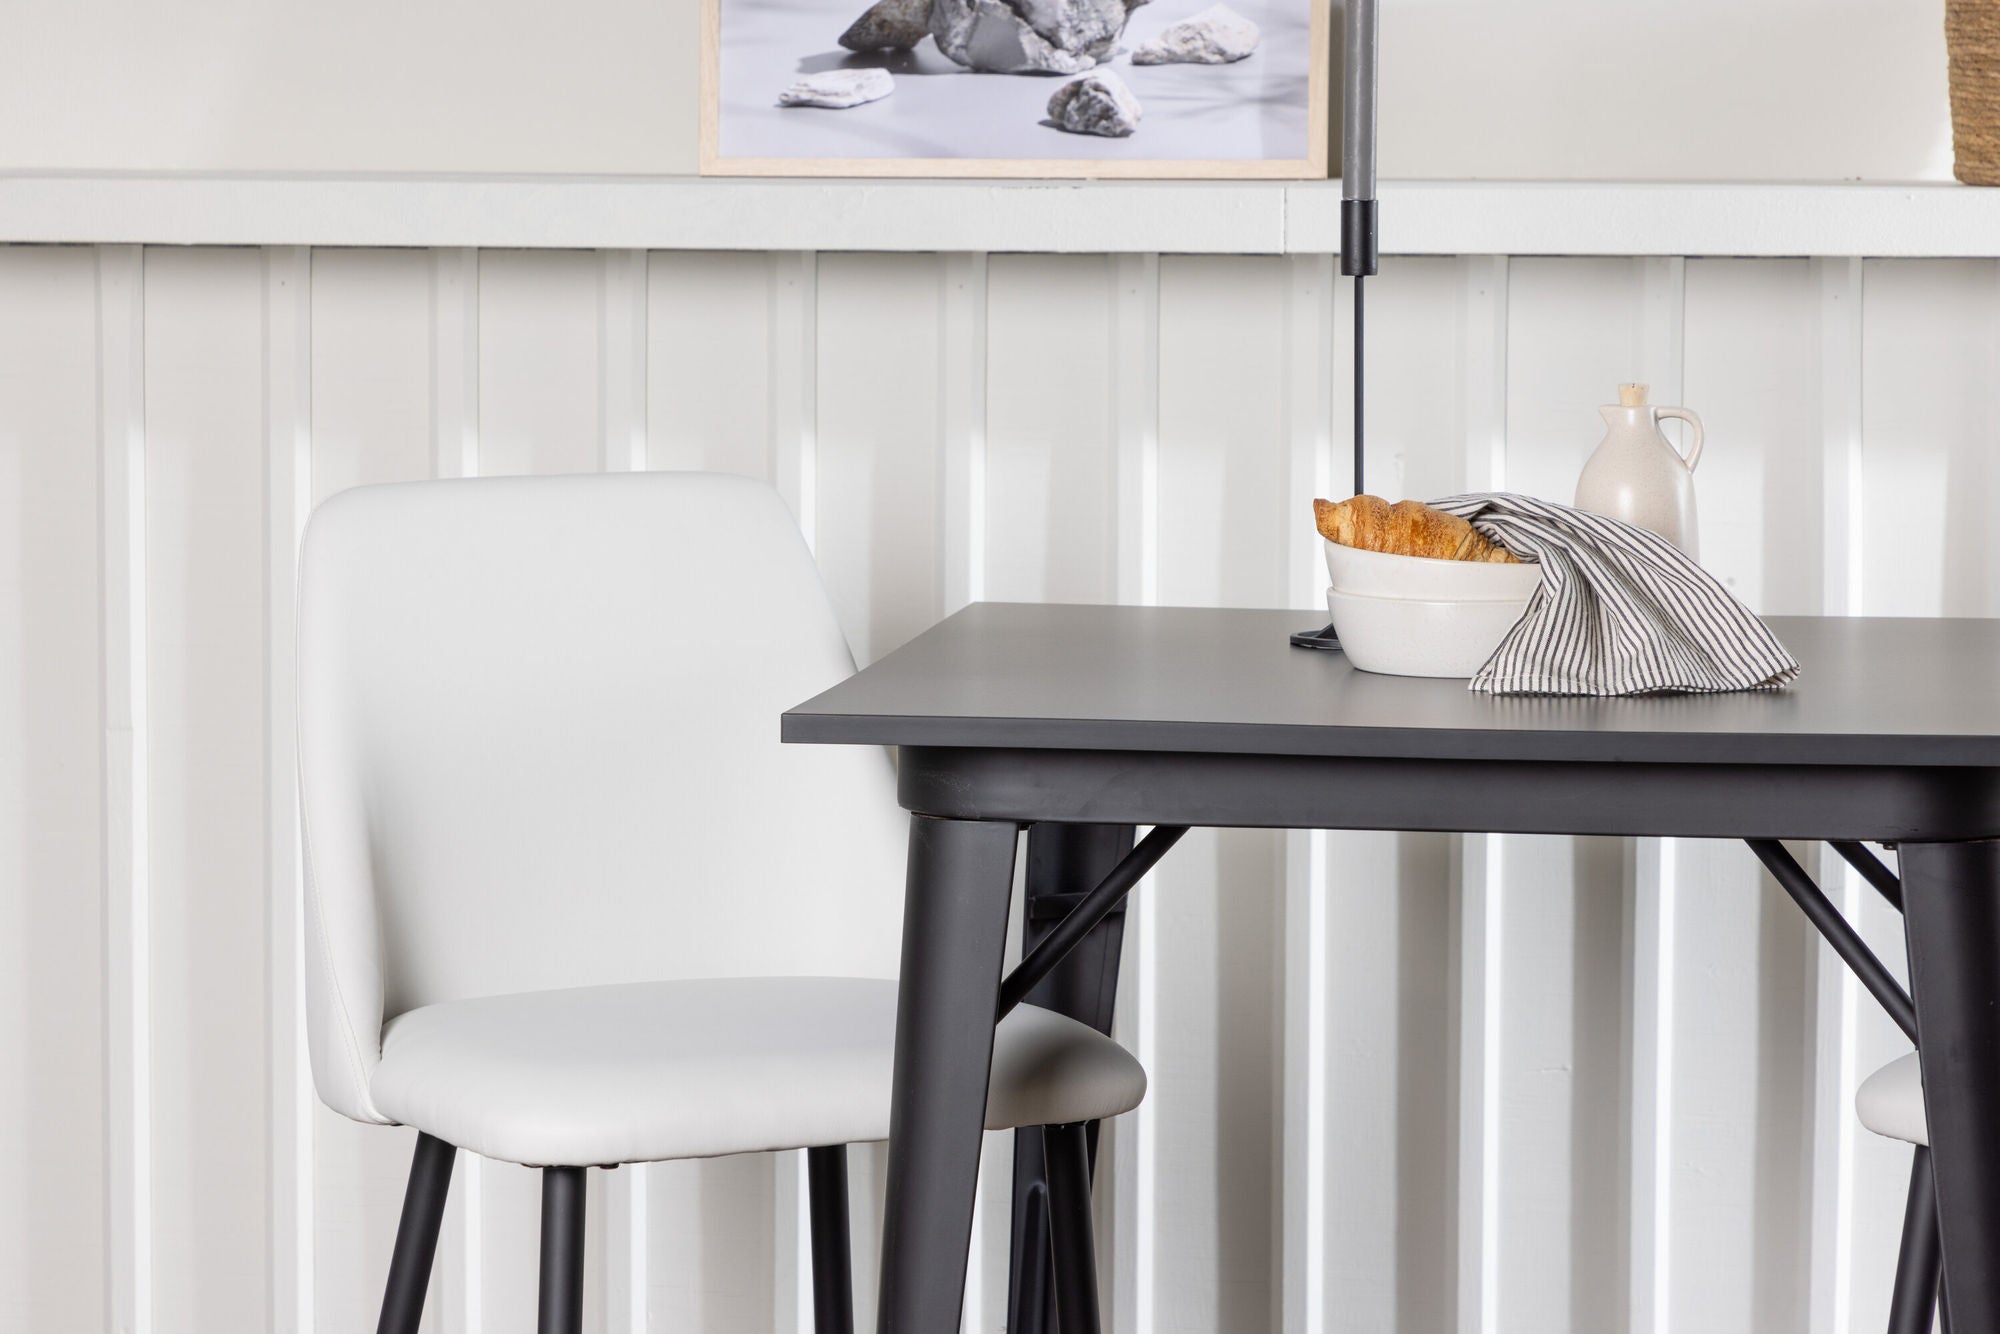 Venture Home Tempe Dining Table - Black / Black MDF +Night Dining Chair - Black / White PU _2